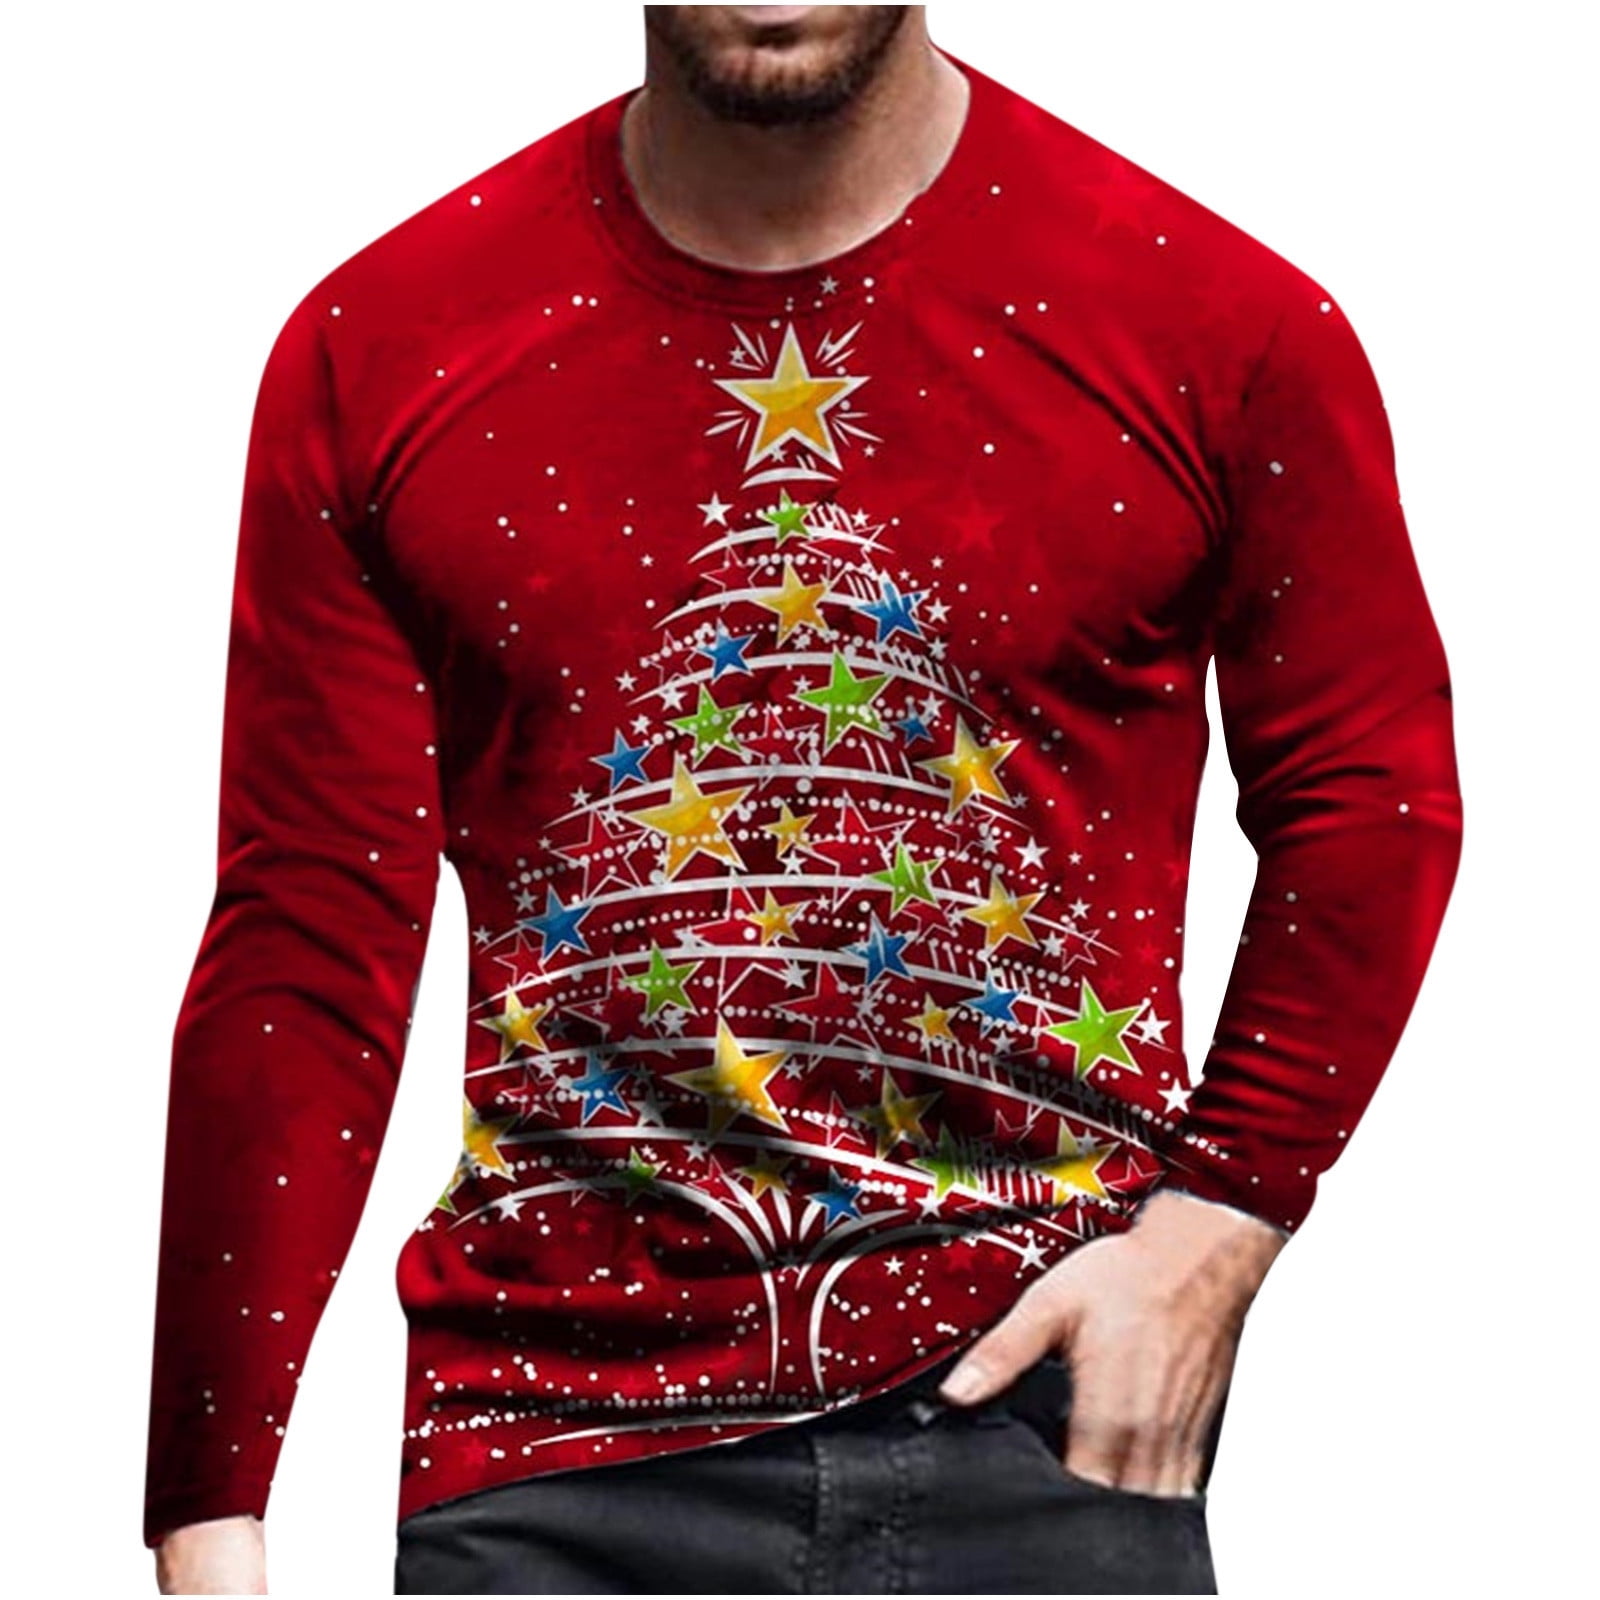 Men's Graphic T Shirts Snowman/Santa Claus 3D Print Casual Ugly ...